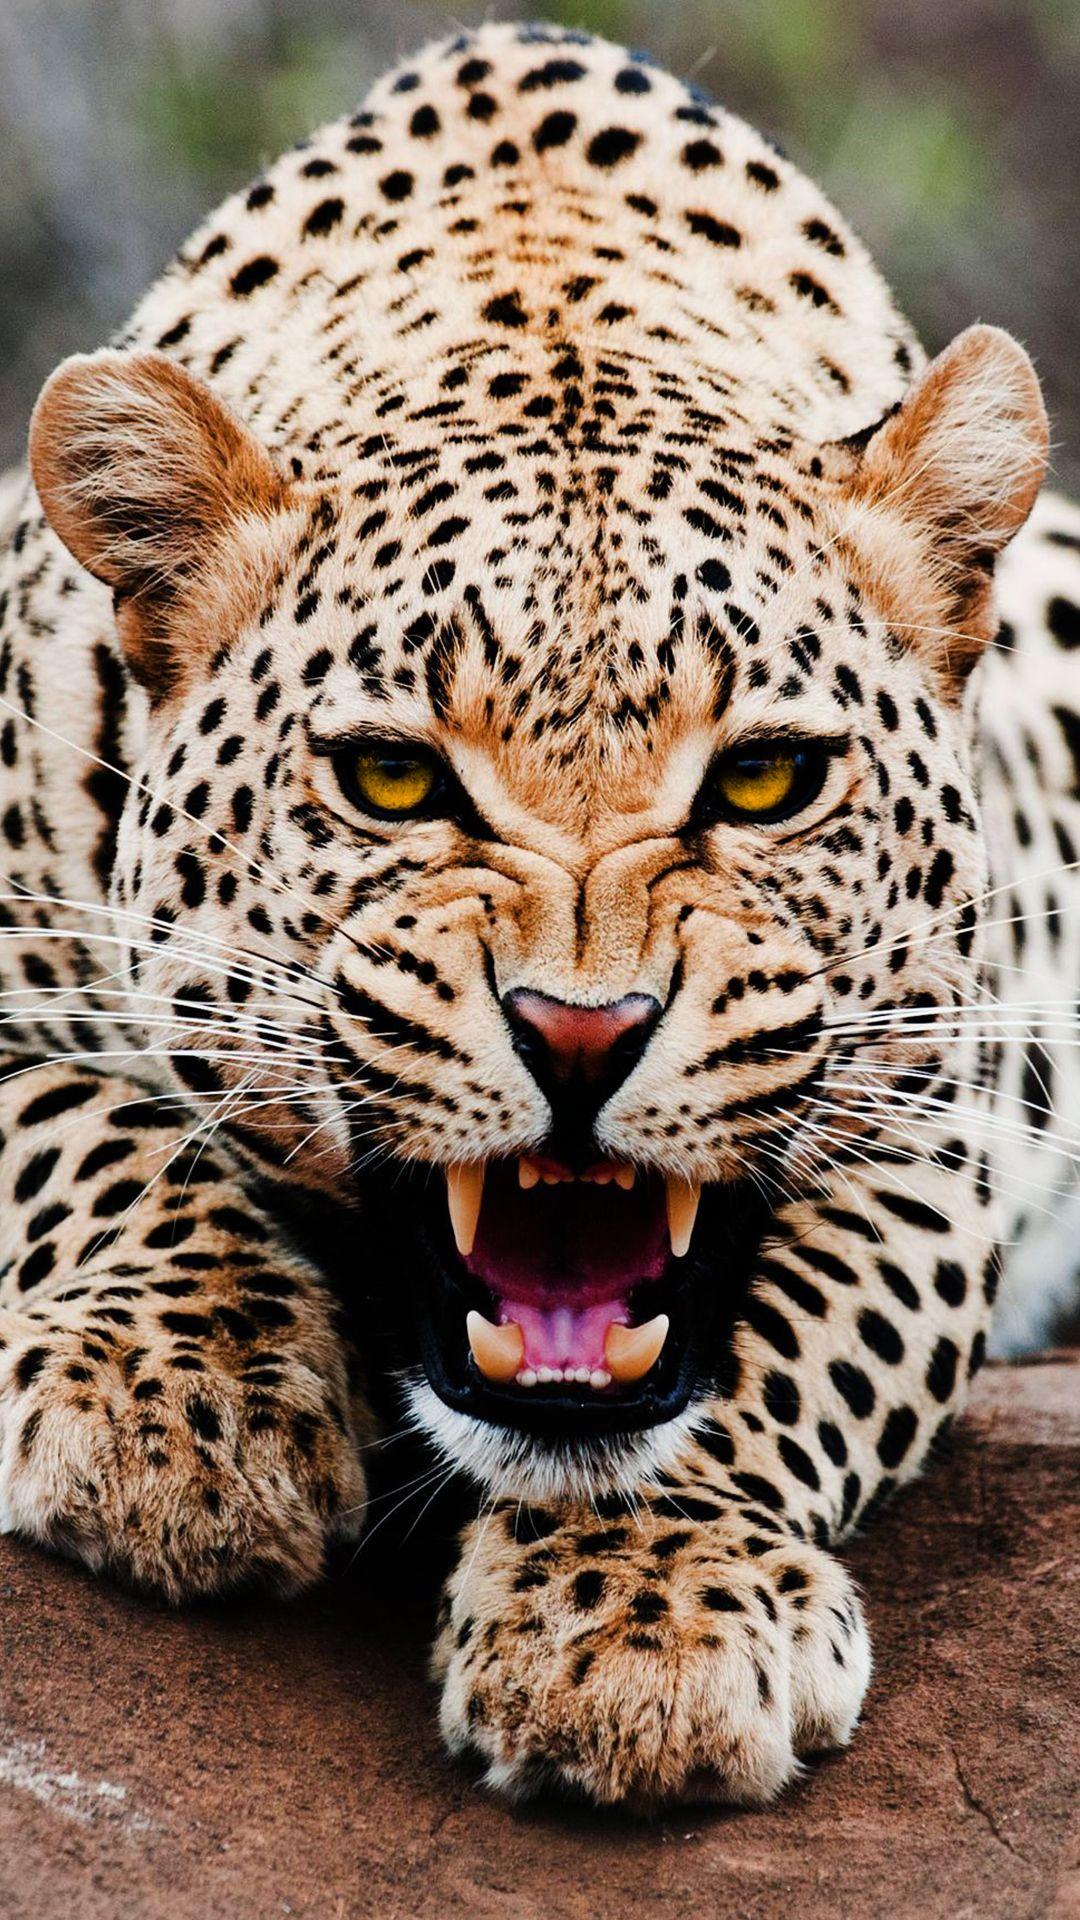 1080x1920 Leopard Hình Nền Điện Thoại - Clouded Leopard Hình Nền iPhone